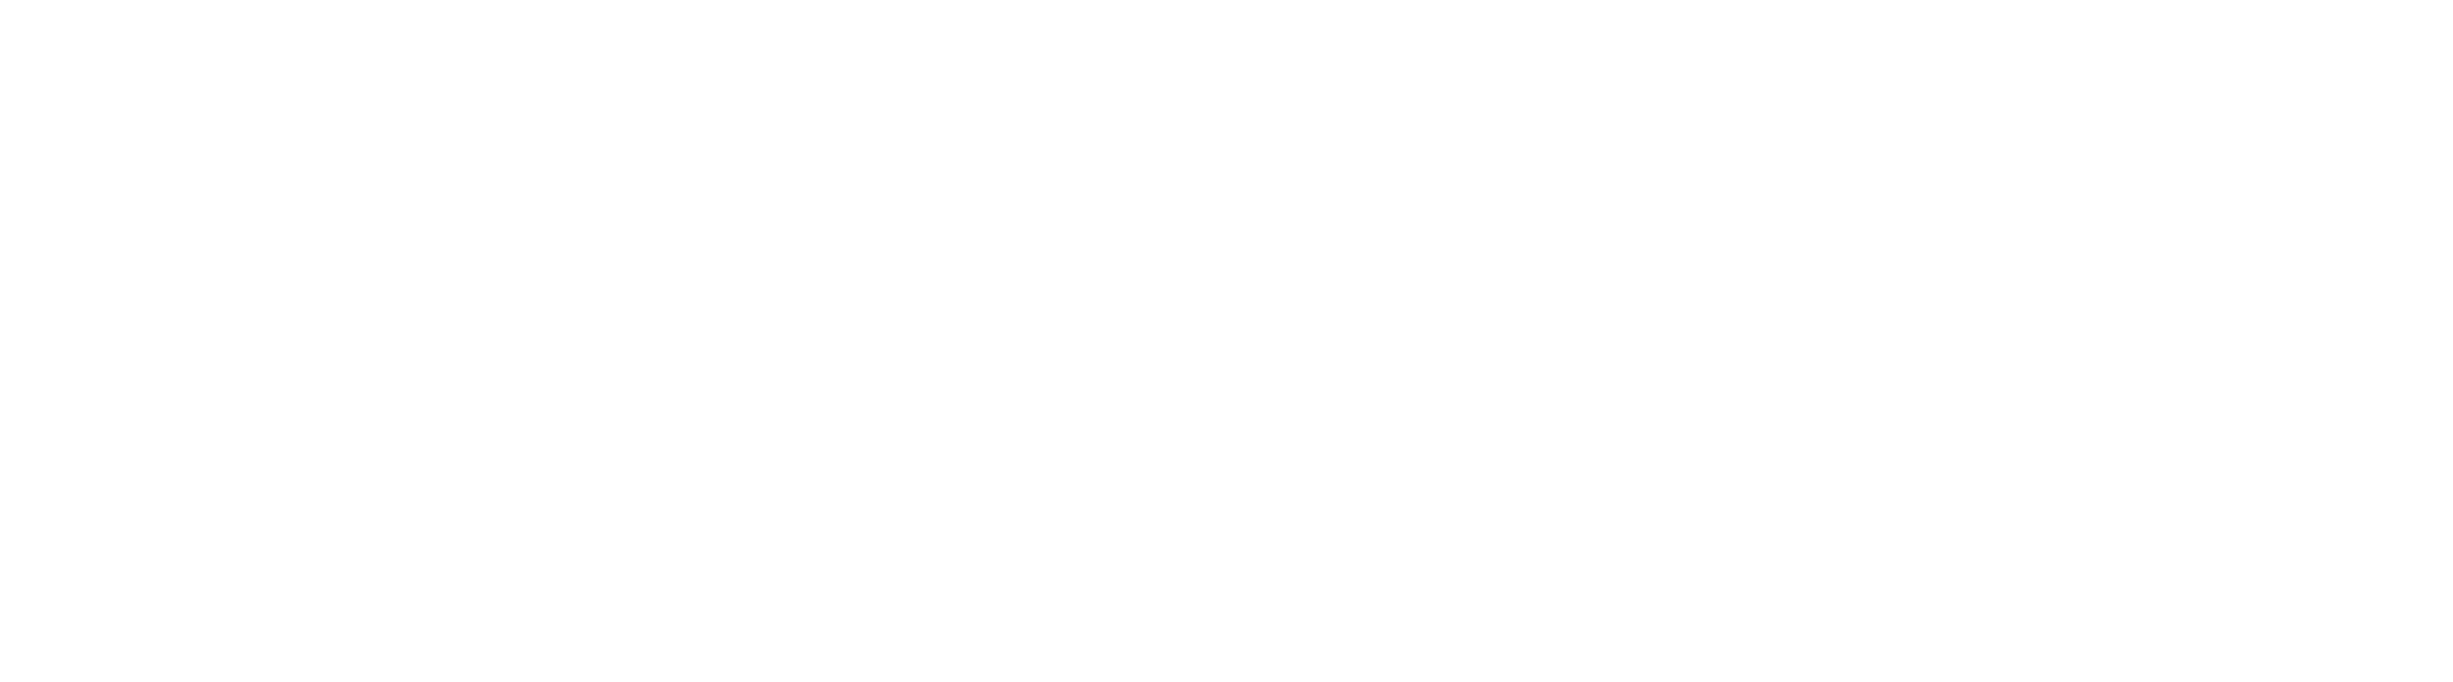 CarePlanner logo.